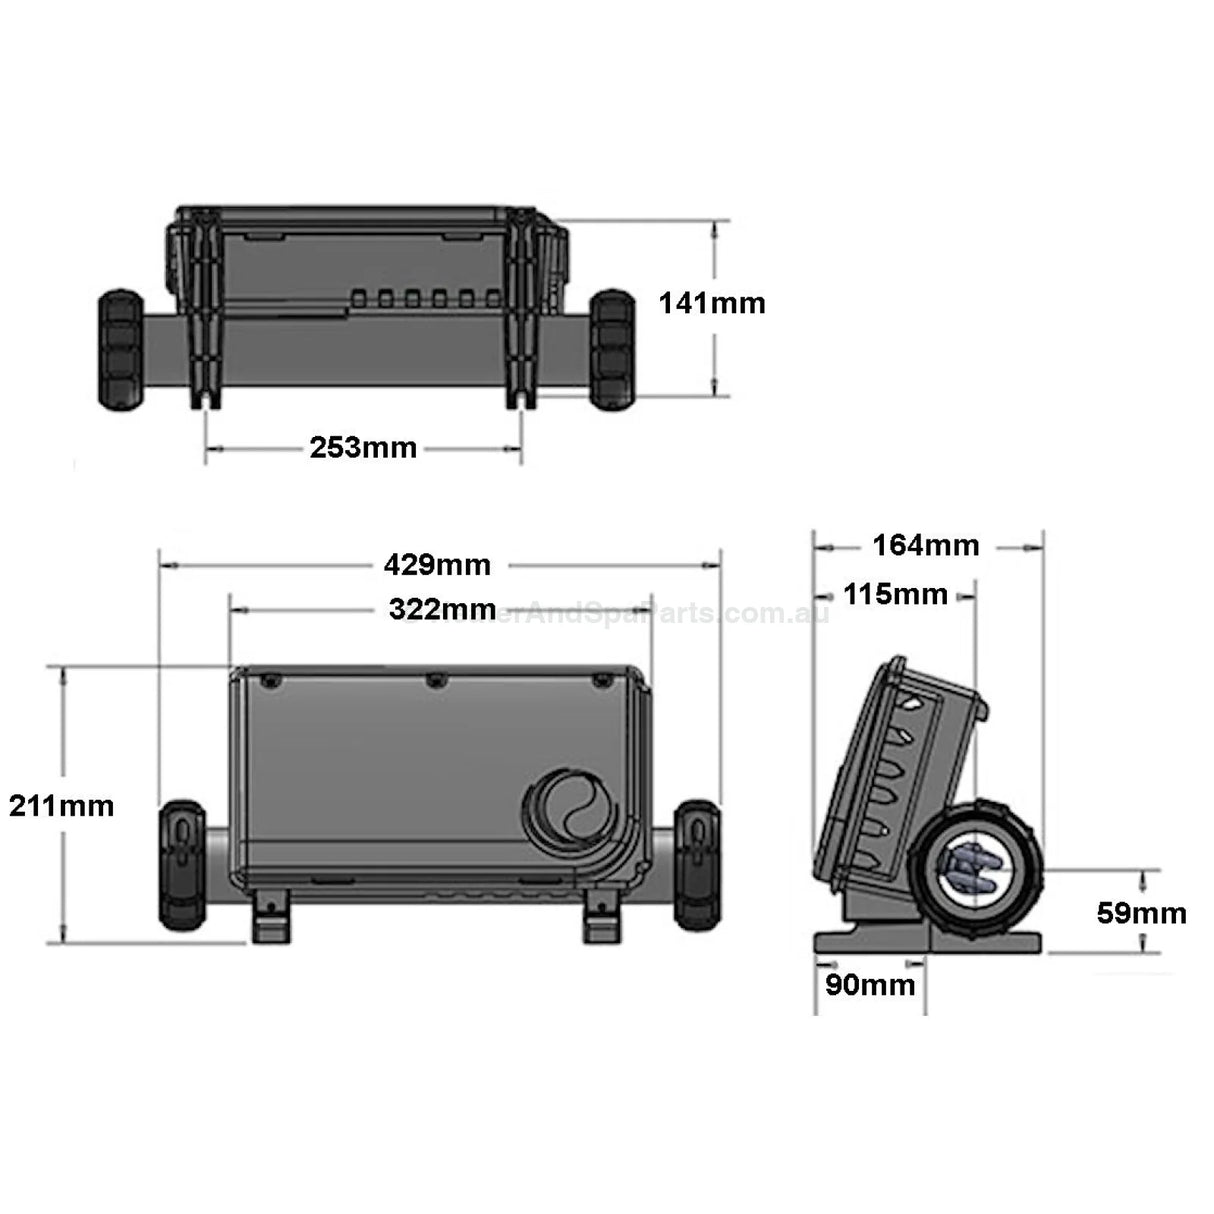 Balboa BP200 Spa Control System Kit - Retrofit - Heater and Spa Parts